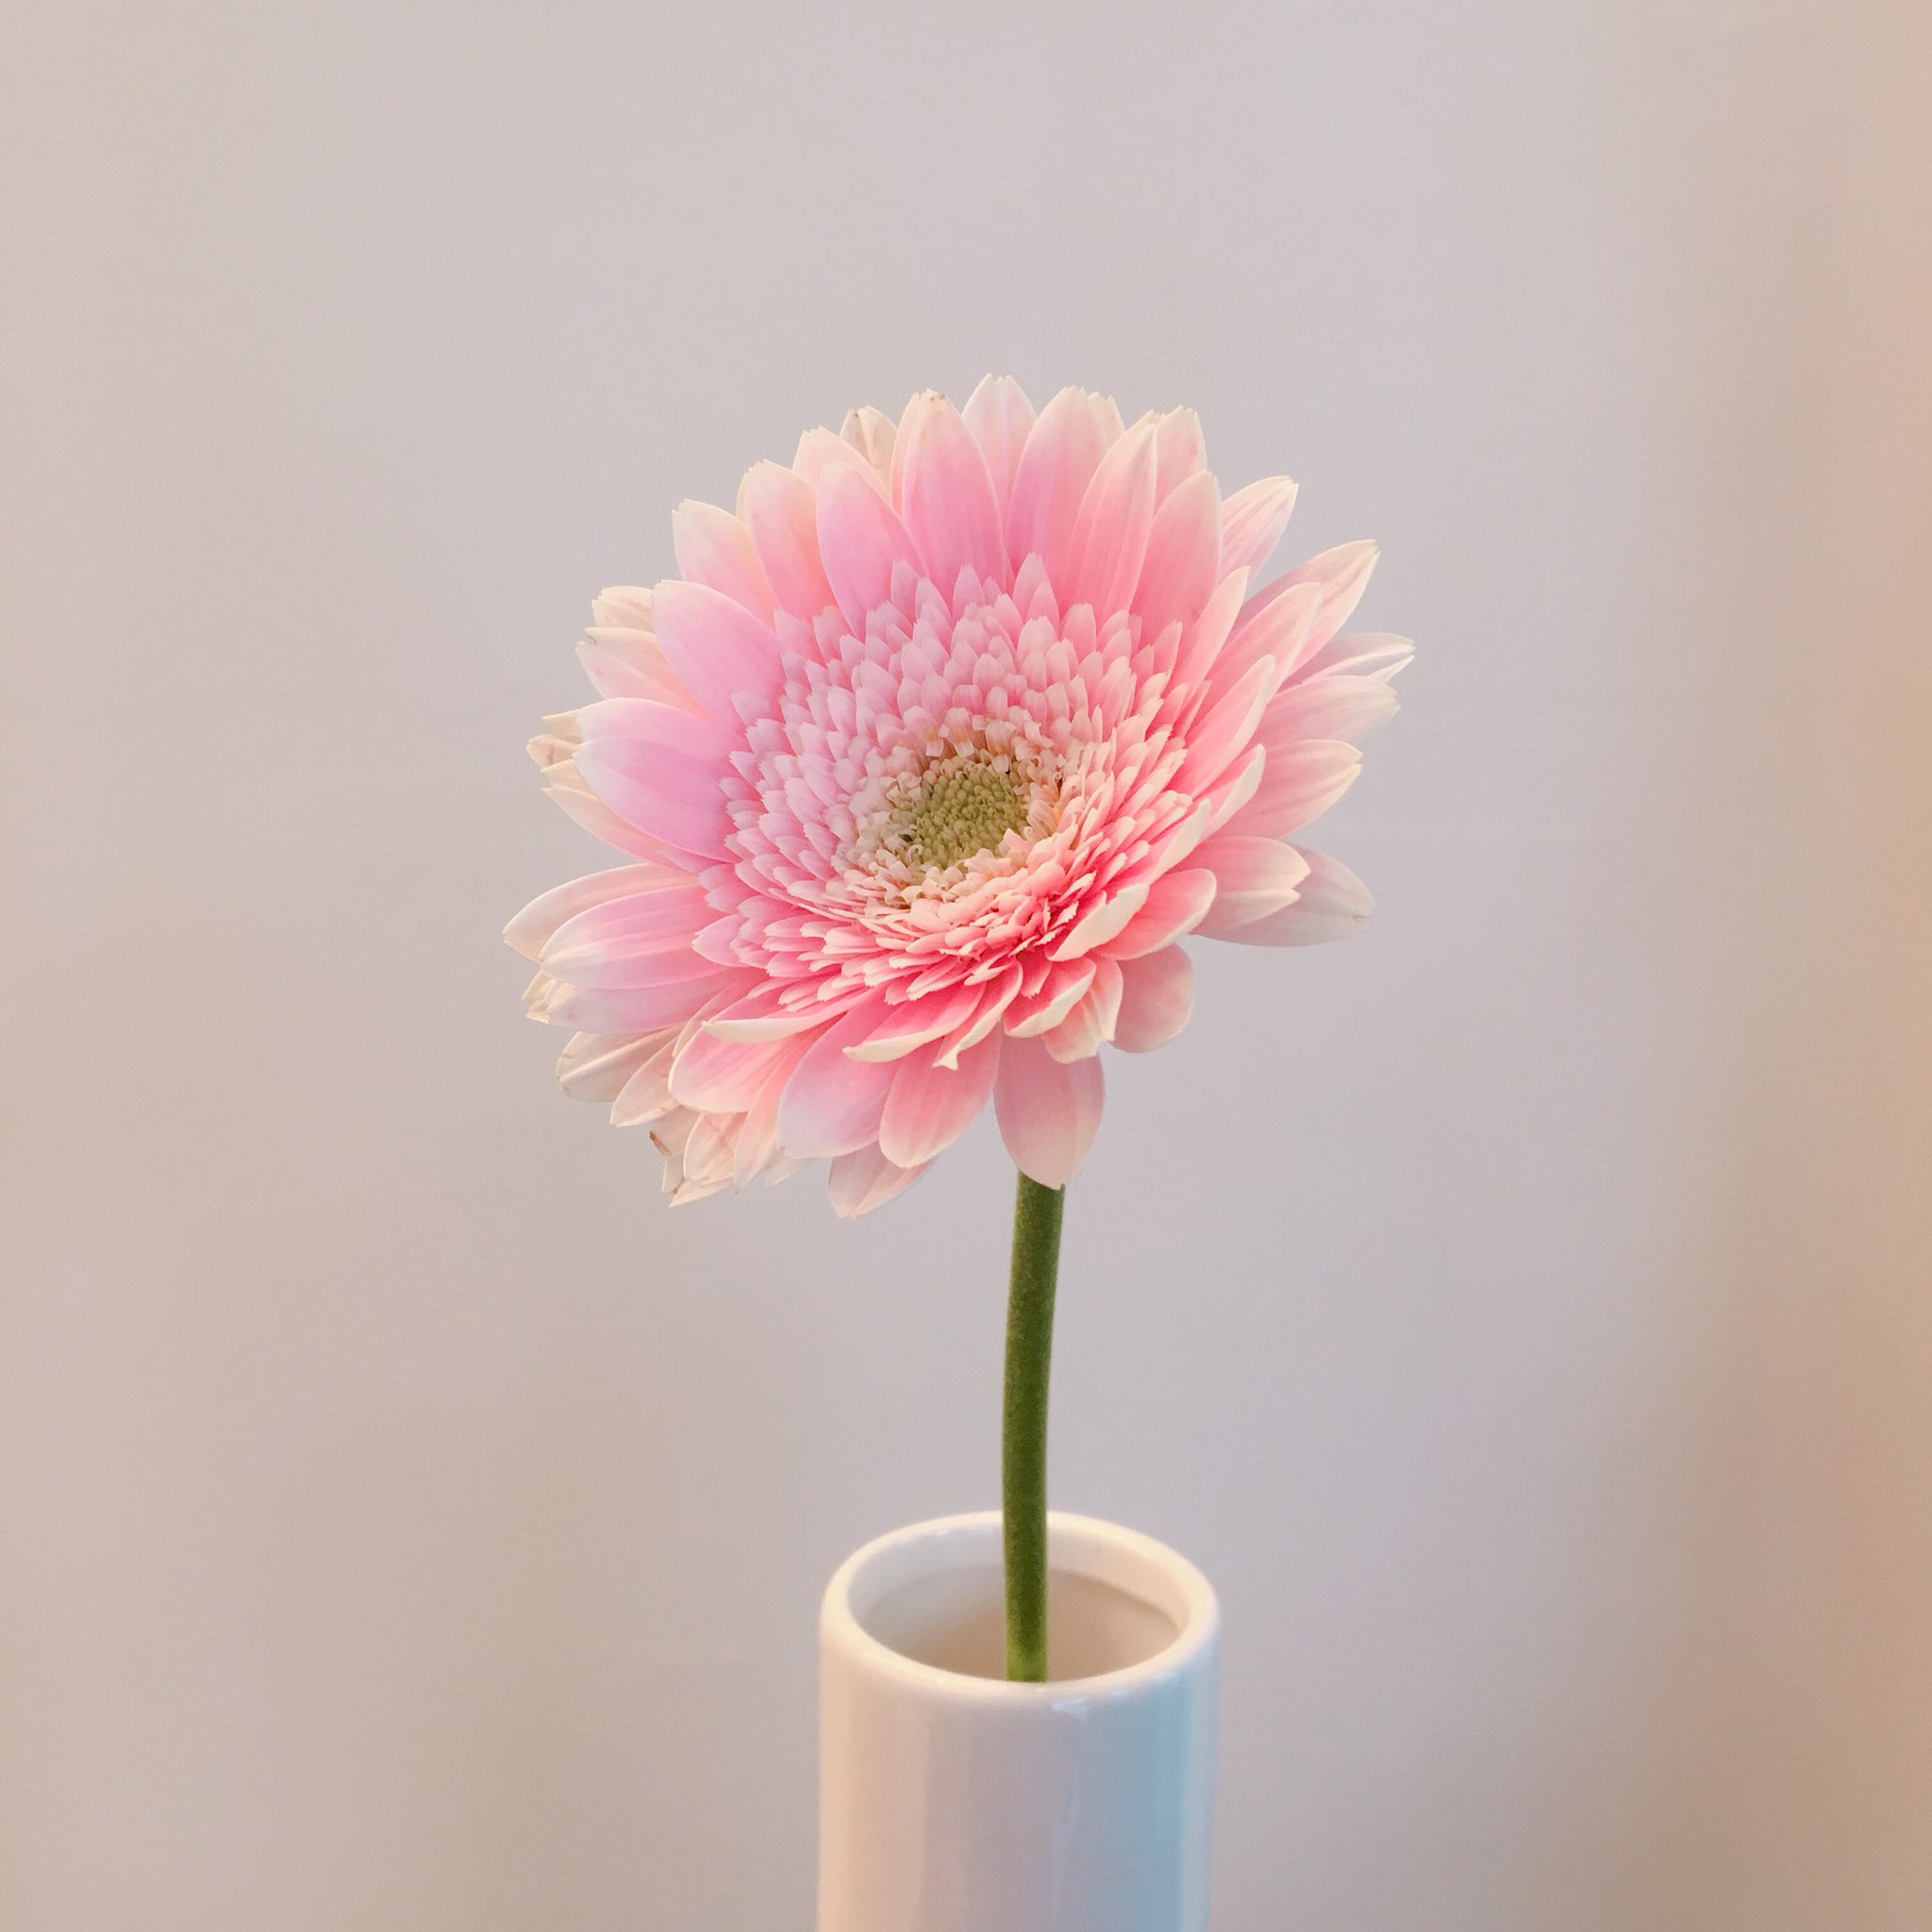 M O Twitterren こんにちは 先程 知人からガーベラの花を頂きました 嬉しい ガーベラの花言葉 希望 常に前進 ピンクのガーベラの花言葉 感謝 思いやり 私の大好きな花 ガーベラ 花言葉 プレゼント うれしい T Co Ld2j5z3hj5